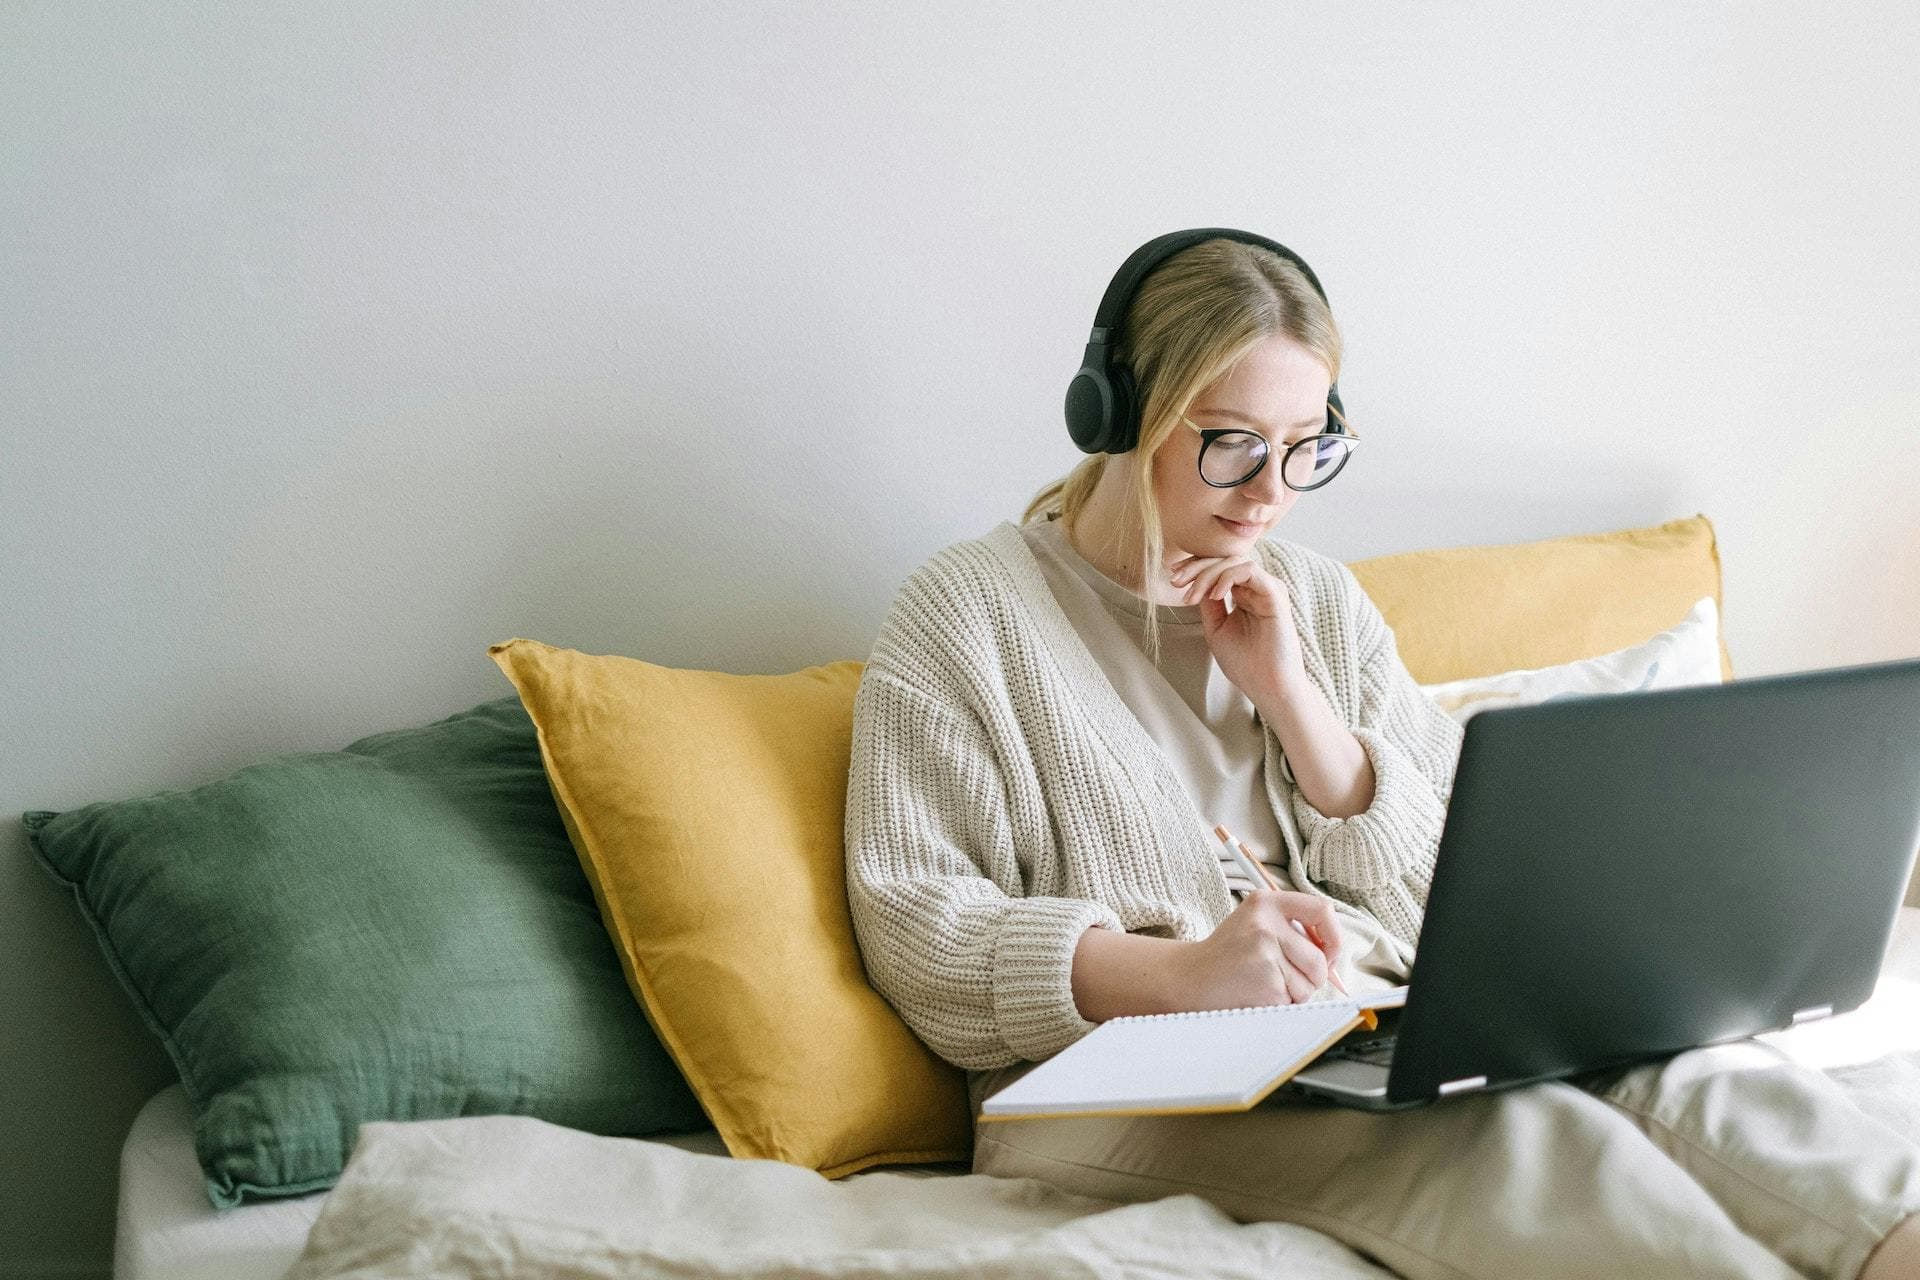 Woman wearing headphones working on laptop in bed